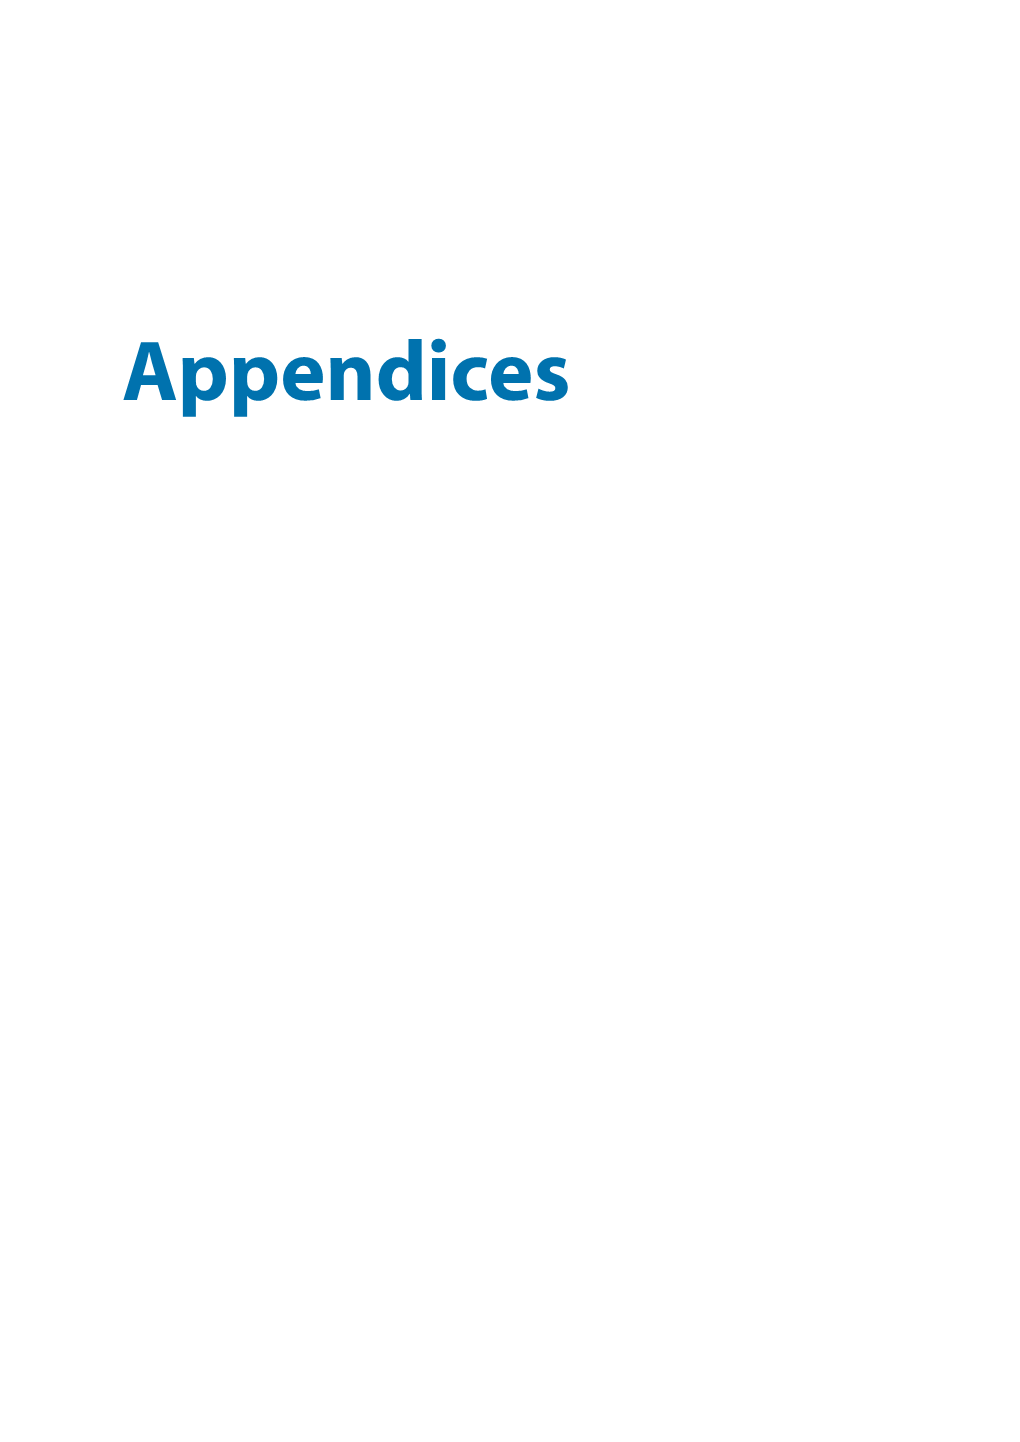 Appendices UNEP ENVIRONMENTAL ASSESSMENT of OGONILAND